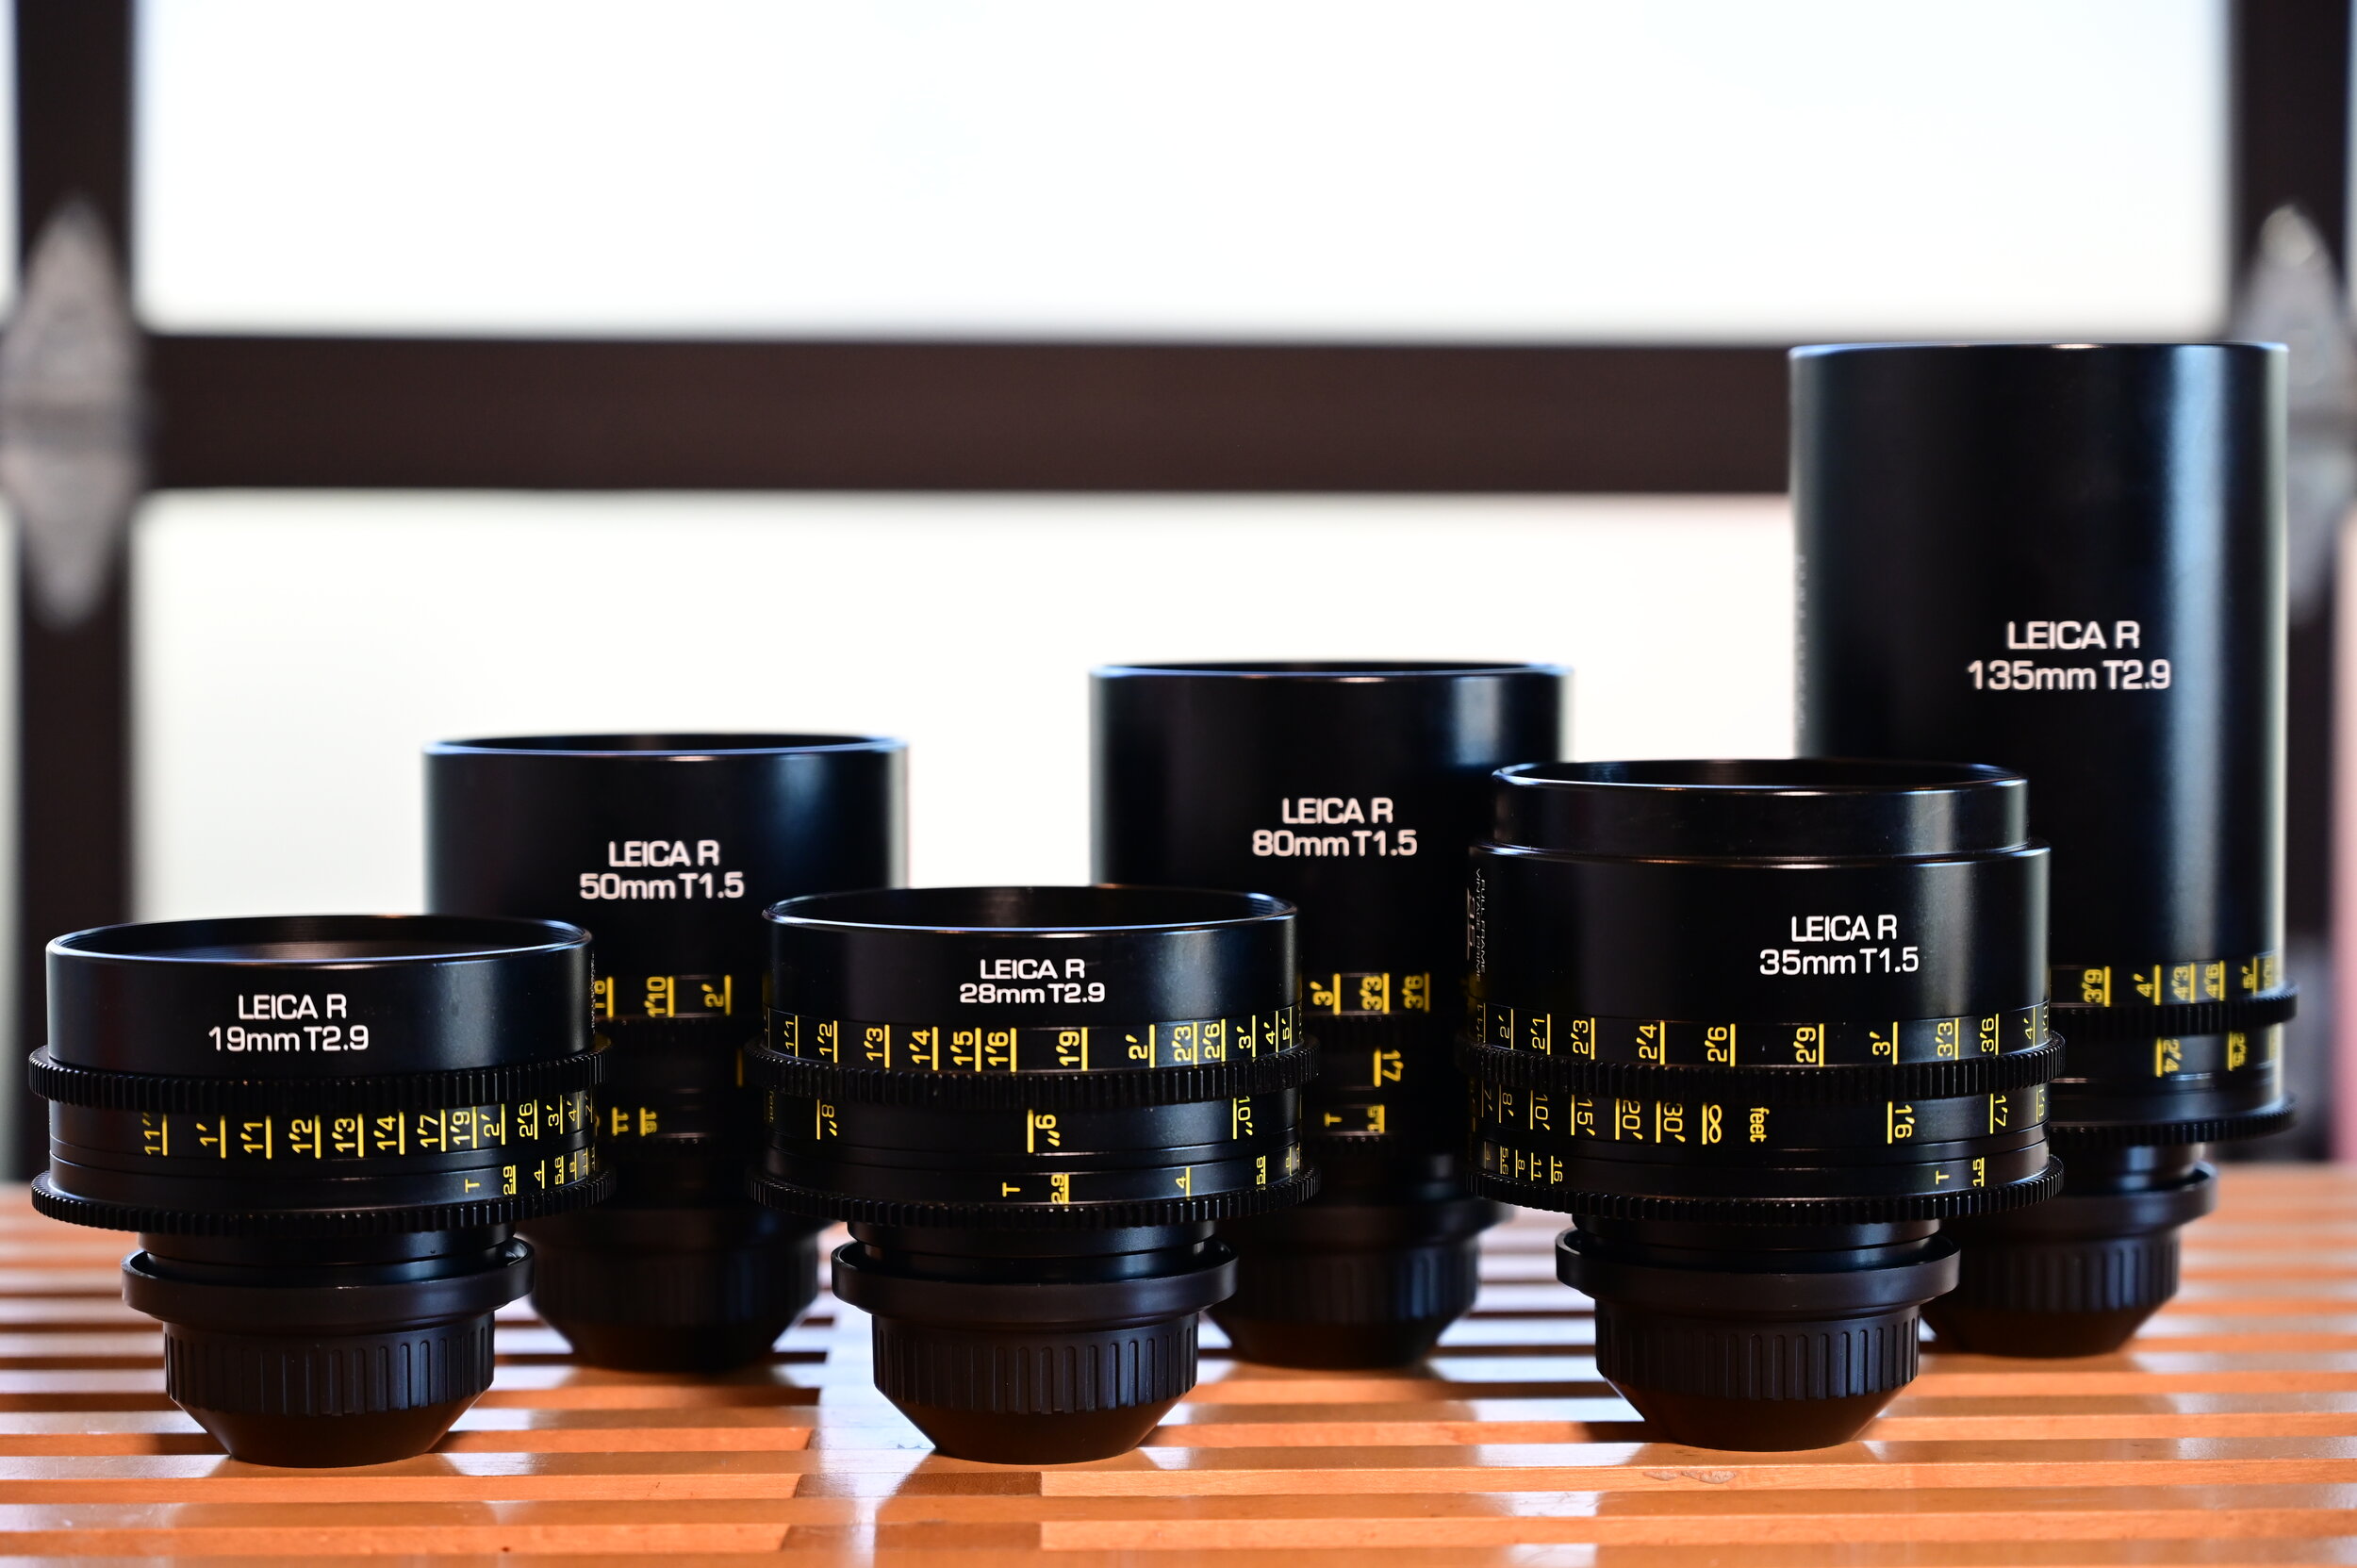 Rent the Leica R Set of Lenses